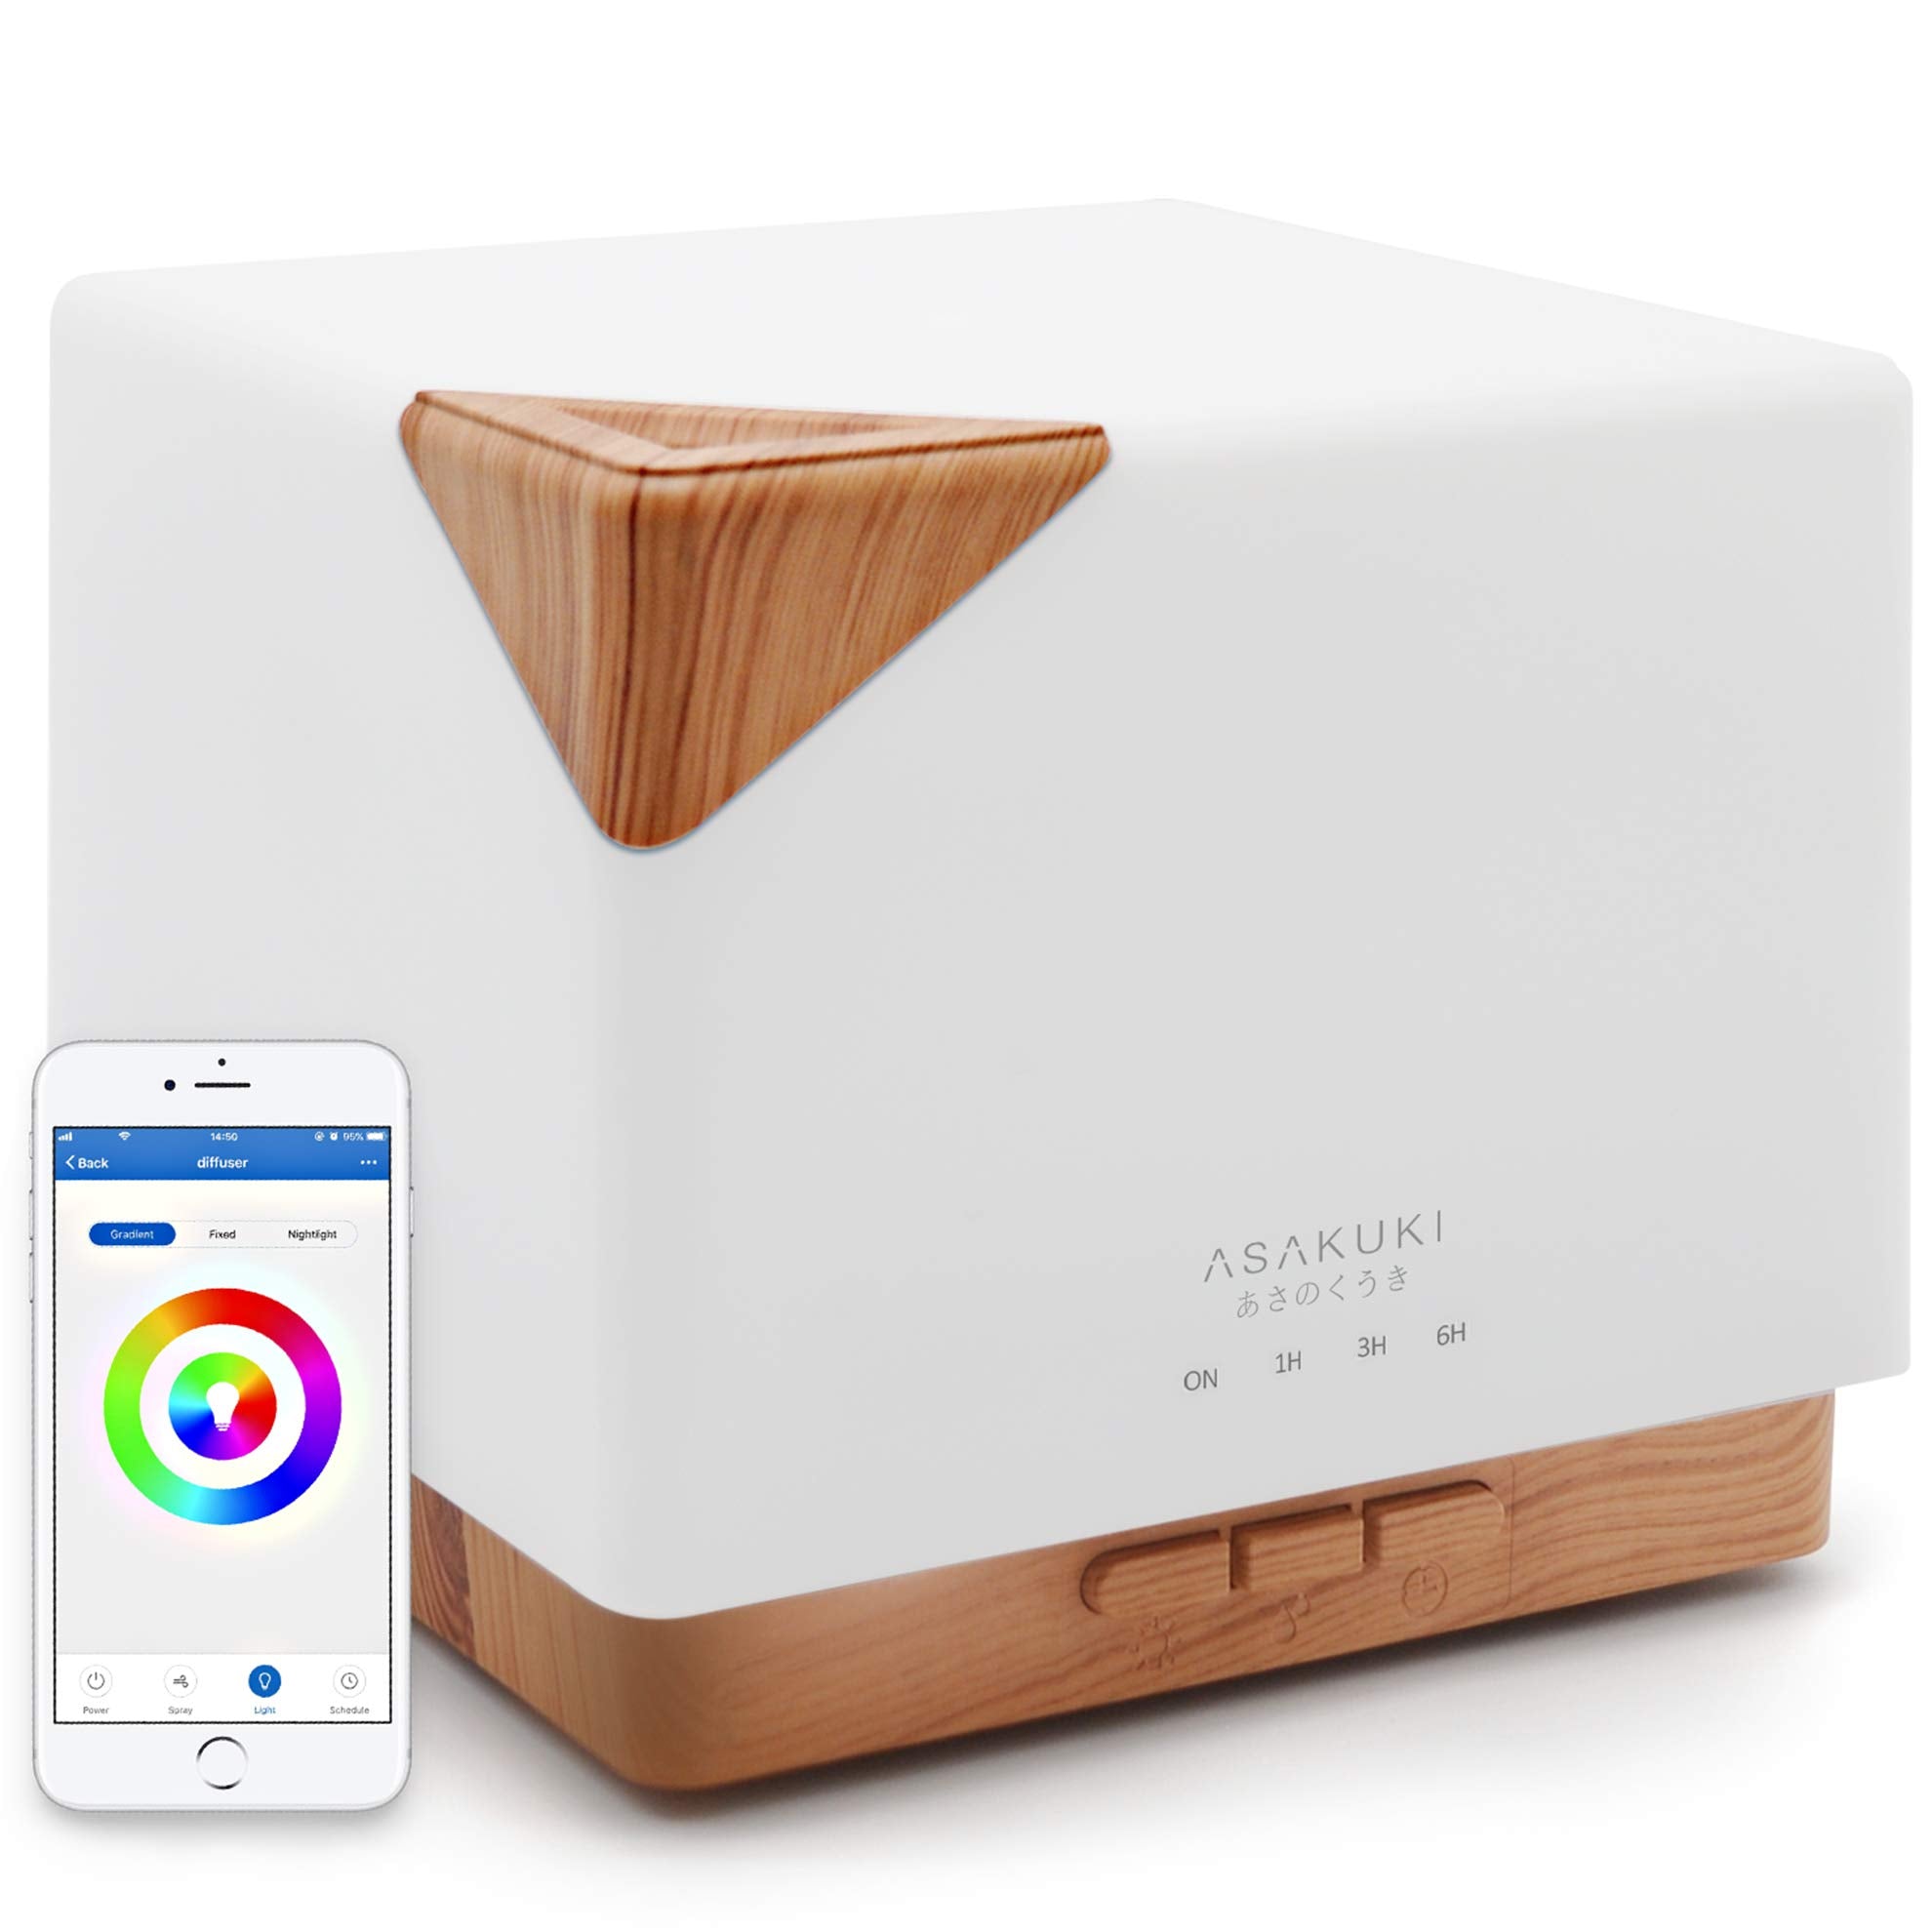 Cube Light Wood Smart WiFi Essential Oil Diffuser